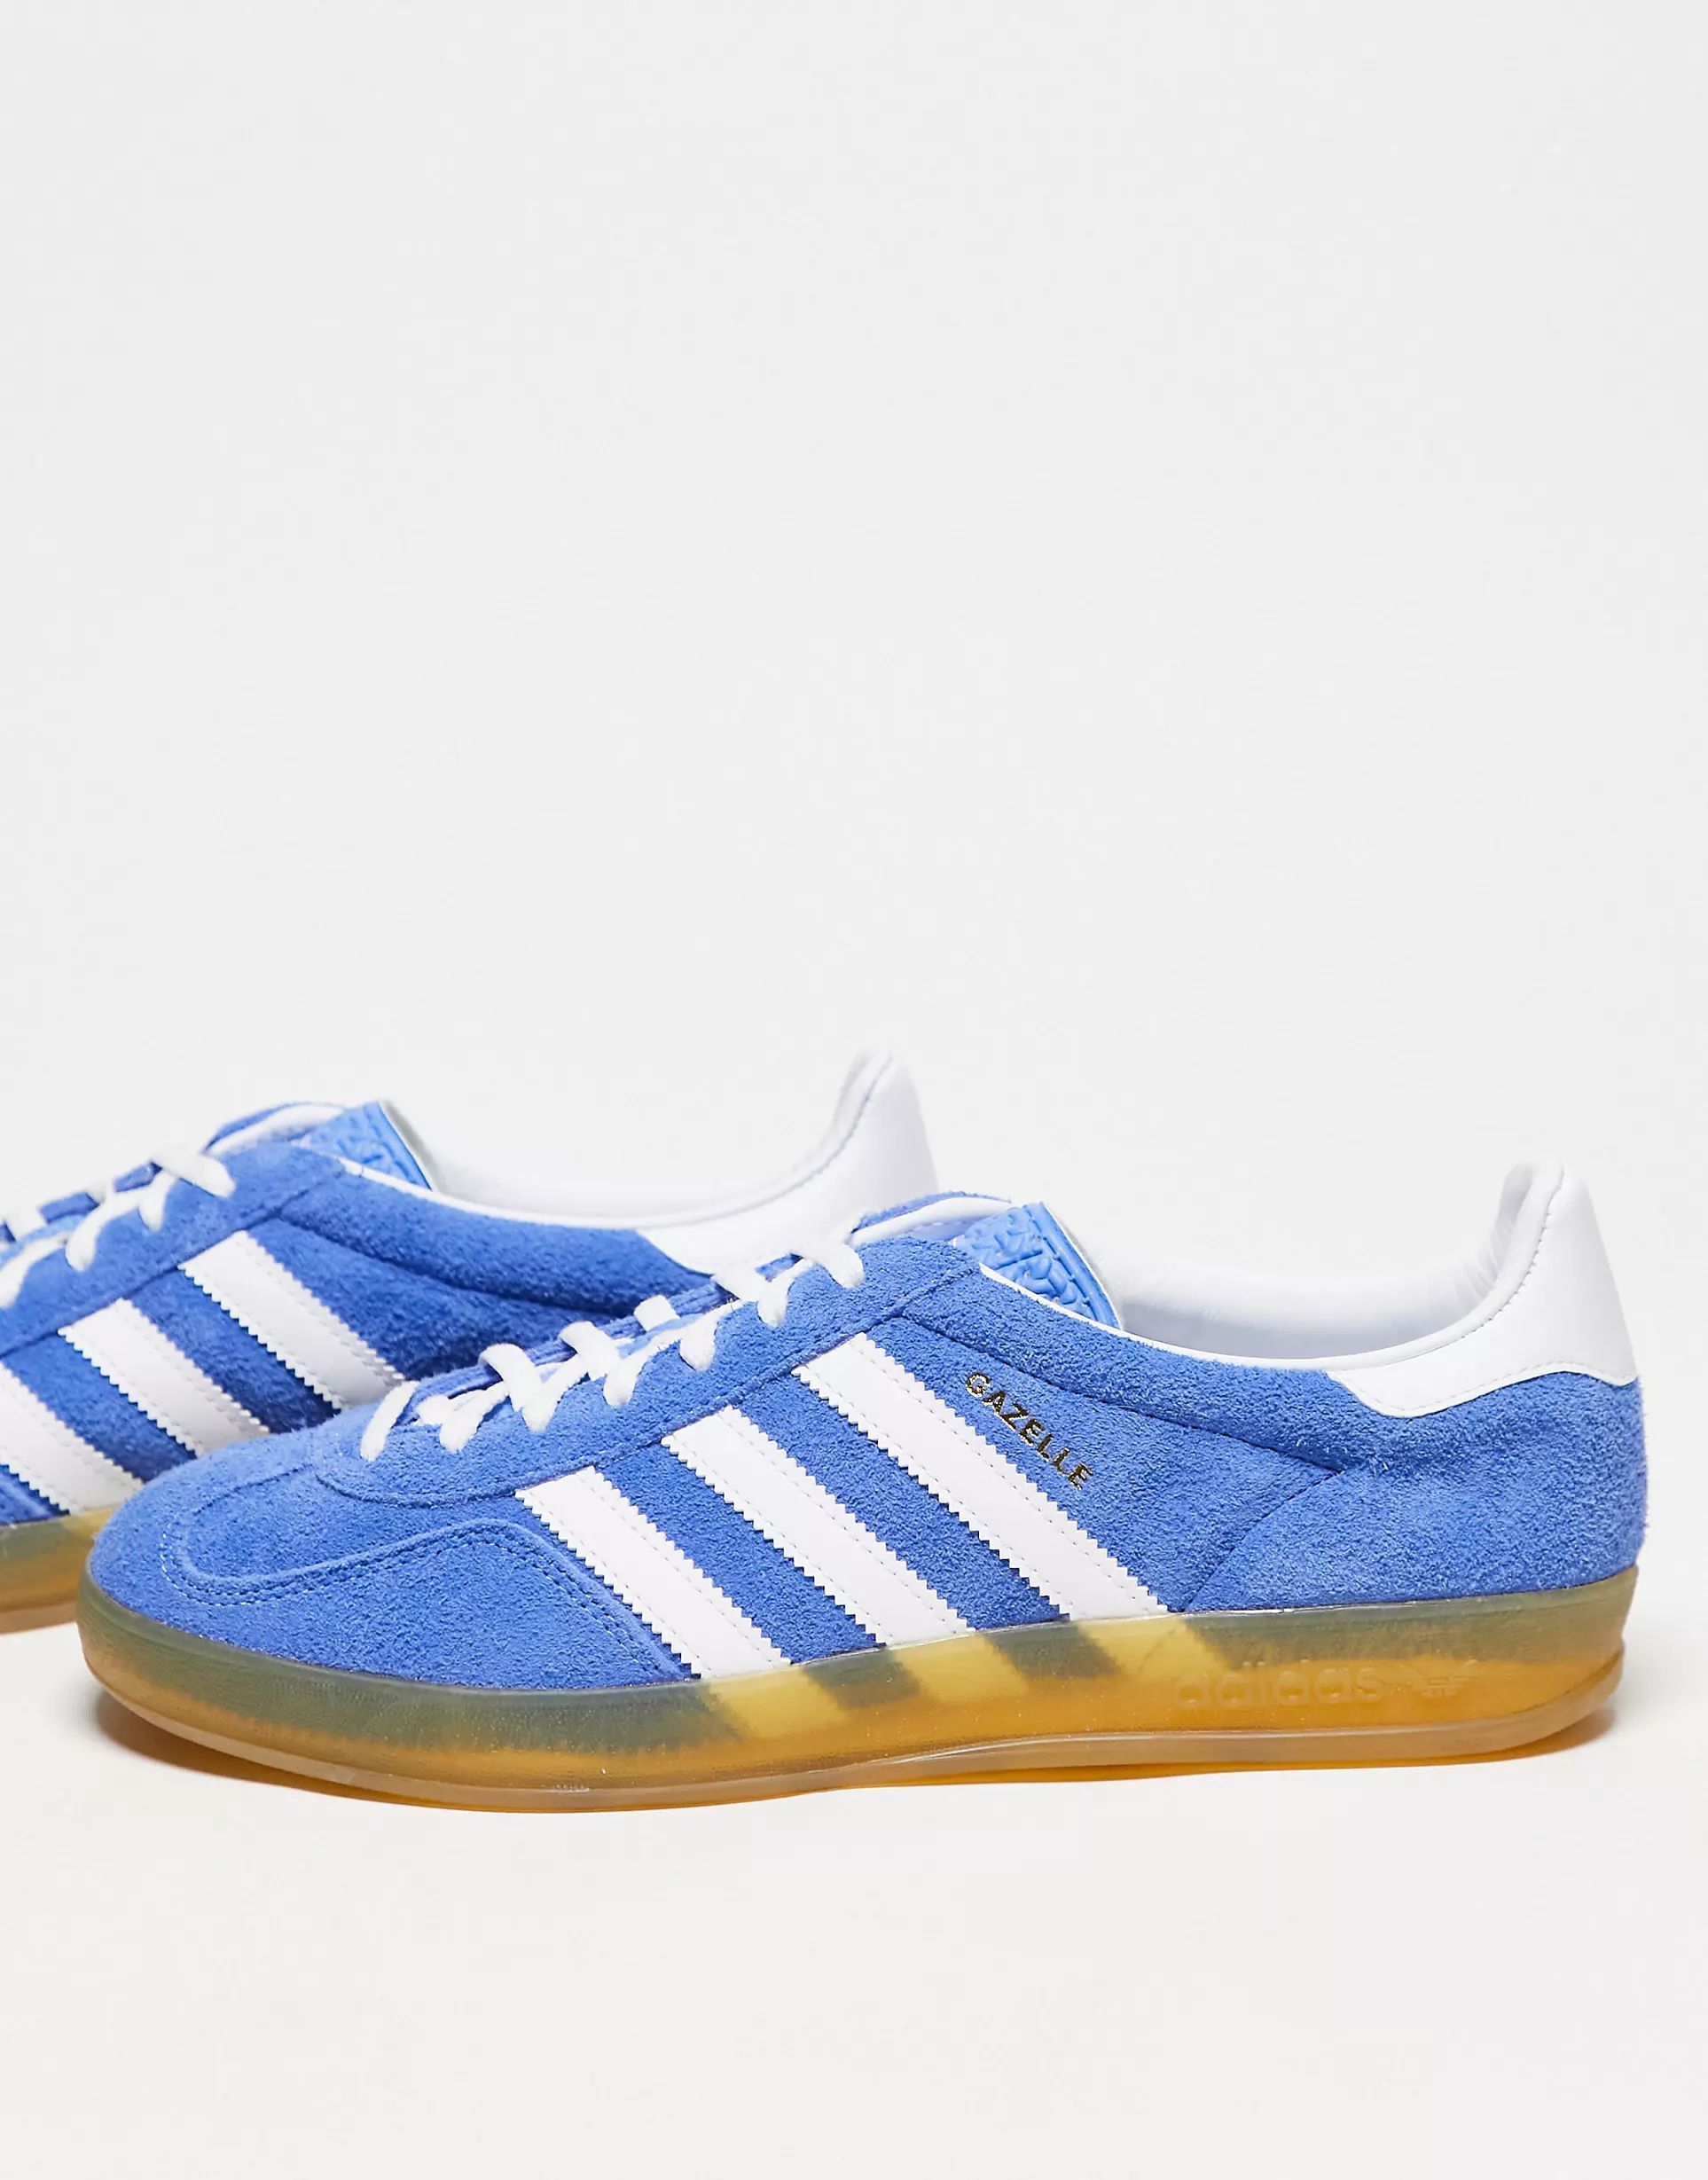 adidas Originals Gazelle Indoor gum sole trainers in light blue | ASOS (Global)